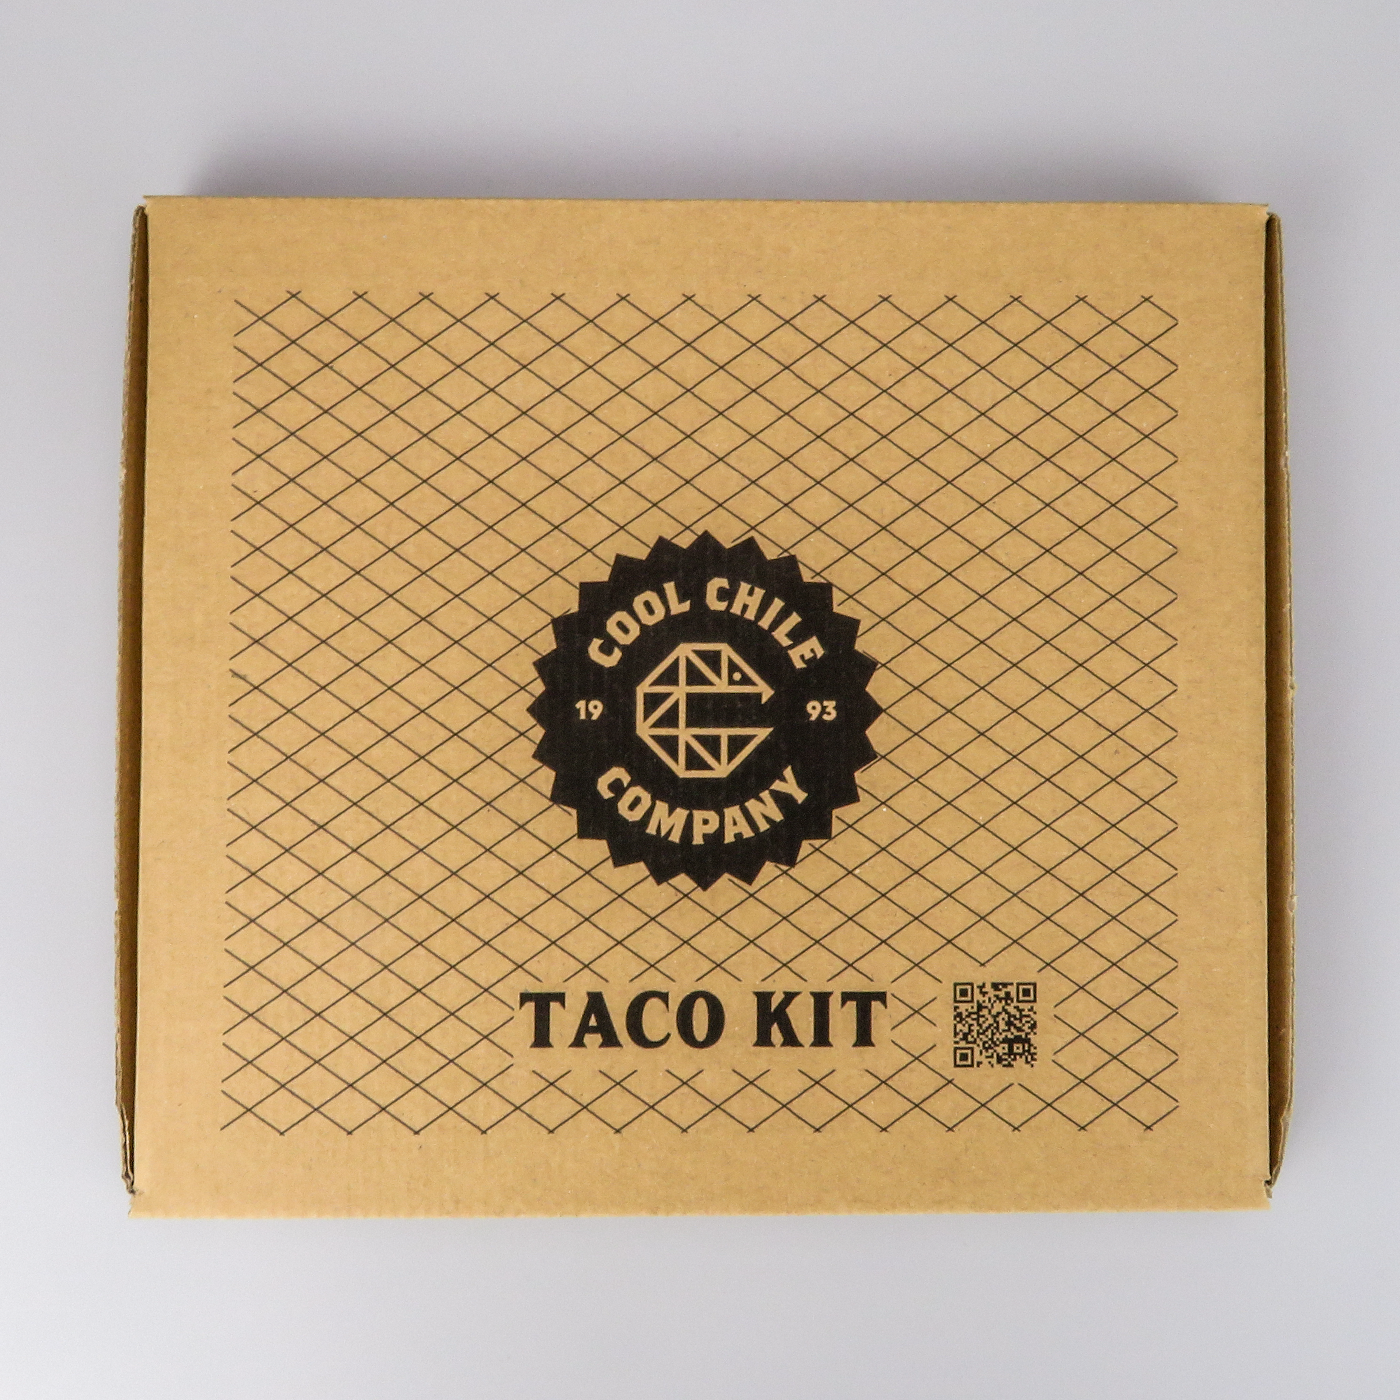 Taco kit oh - product image